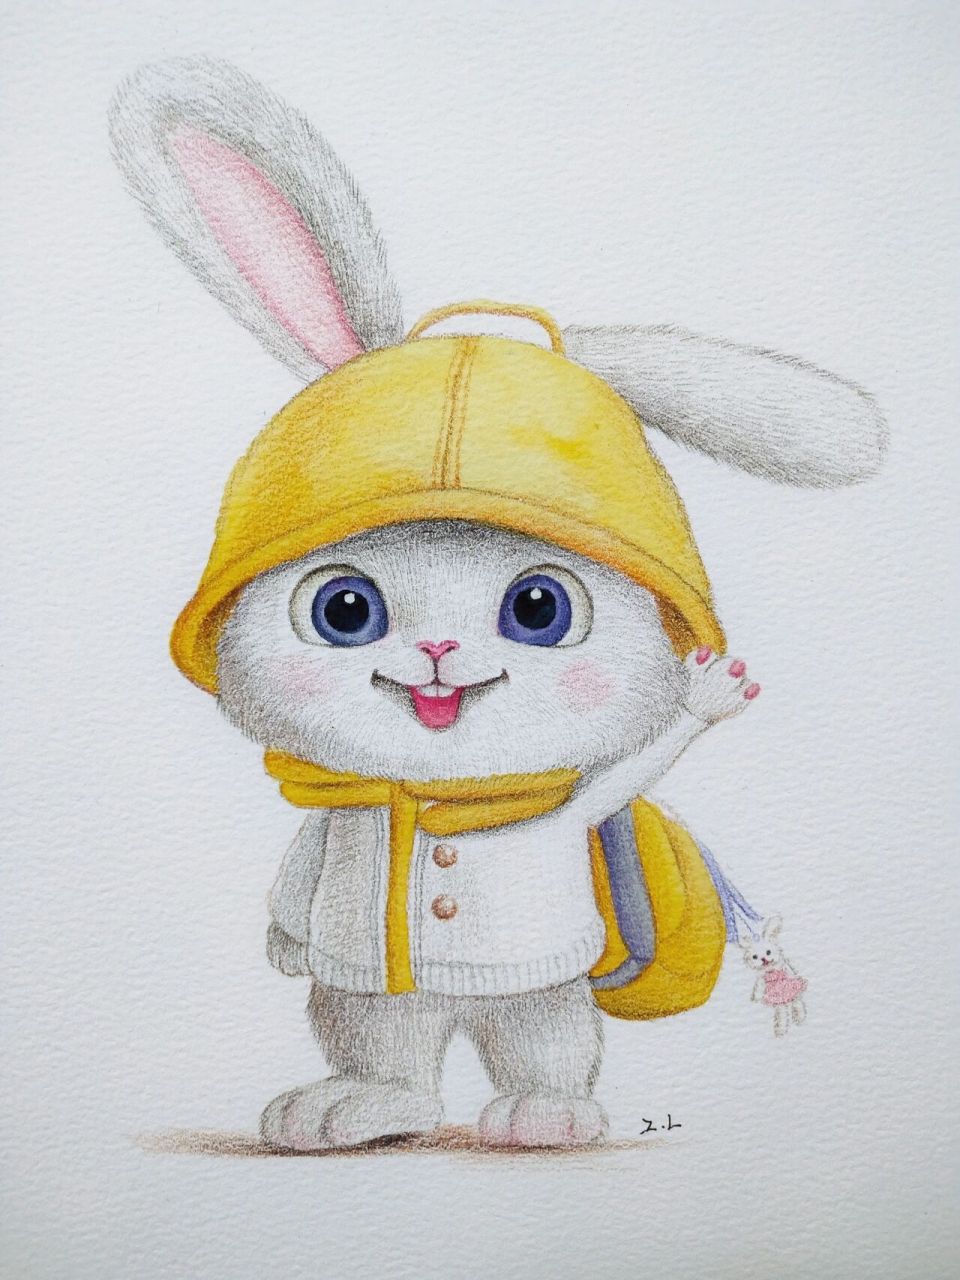 92:hi~ 彩铅小兔子77步骤图949494 今天又画可爱小兔子啦!